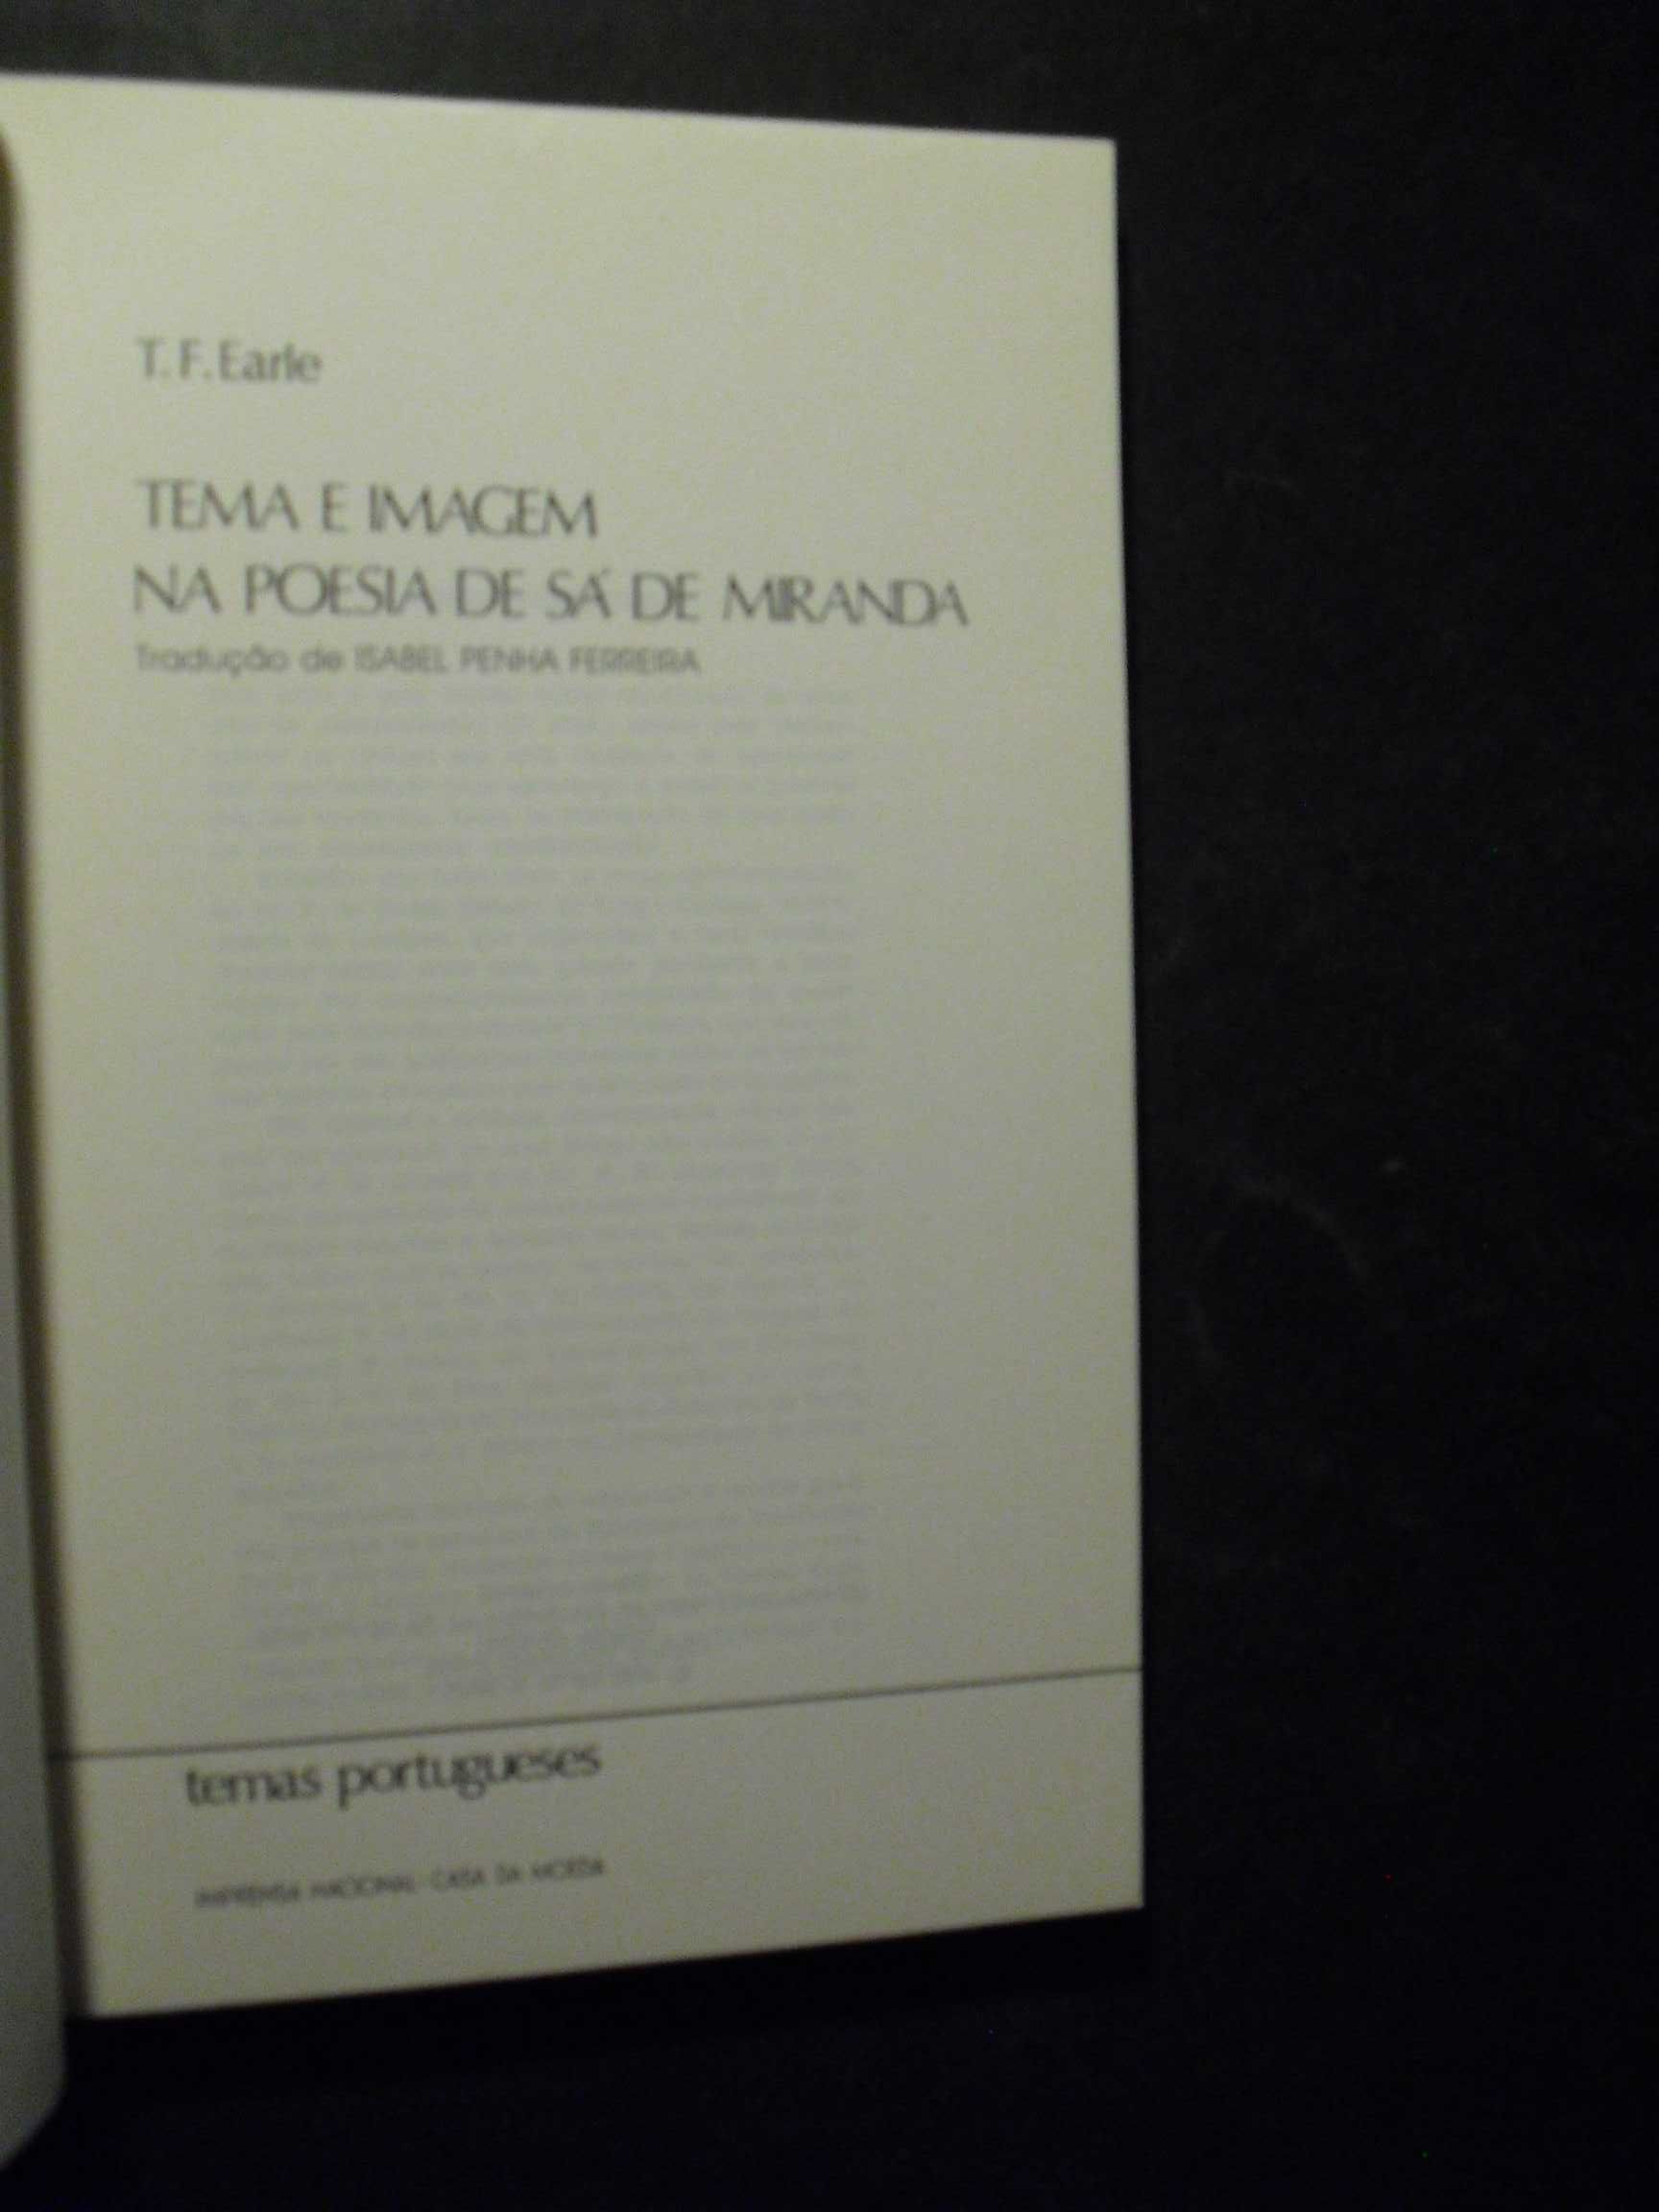 Earle (F.F);Tema e Imagem na Poesia de Sá de Miranda